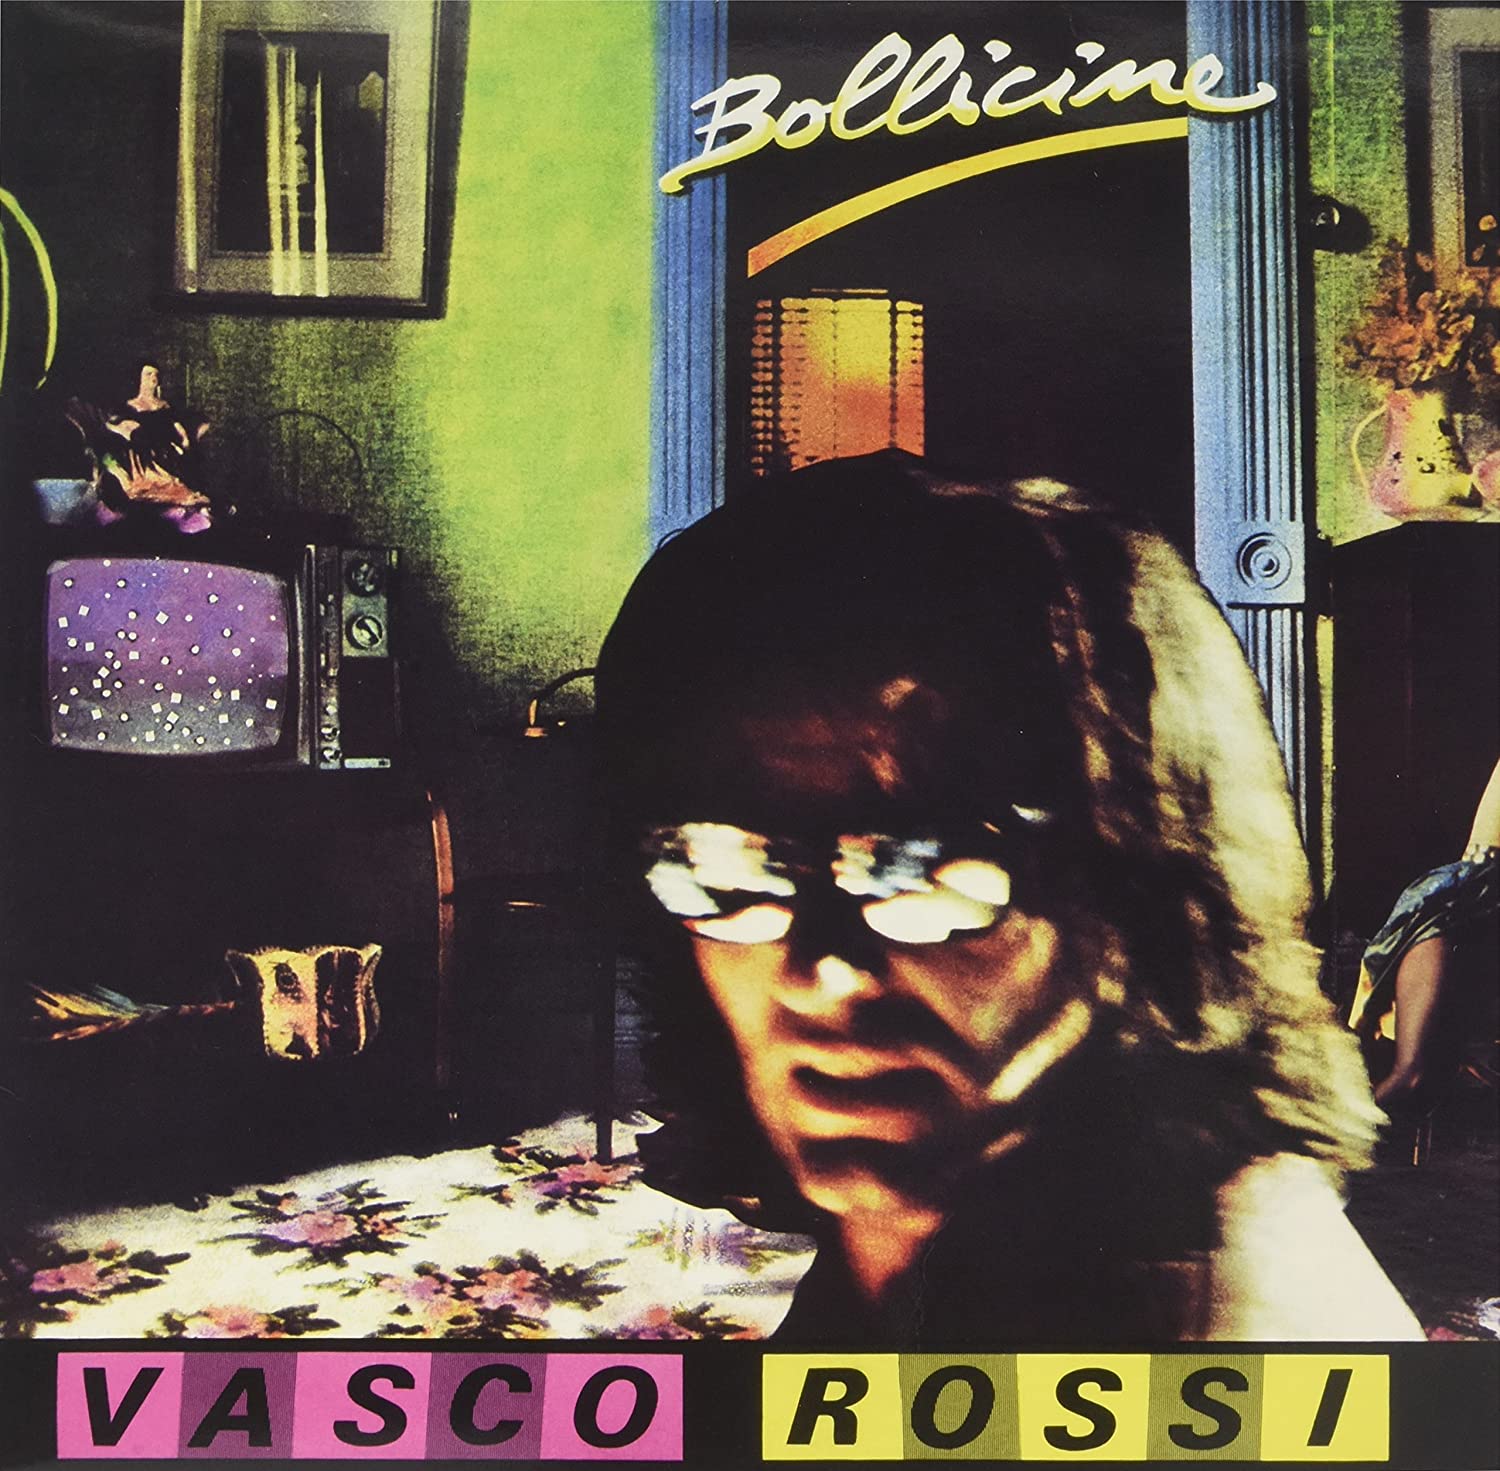 Copertina Vinile 33 giri Bollicine di Vasco Rossi